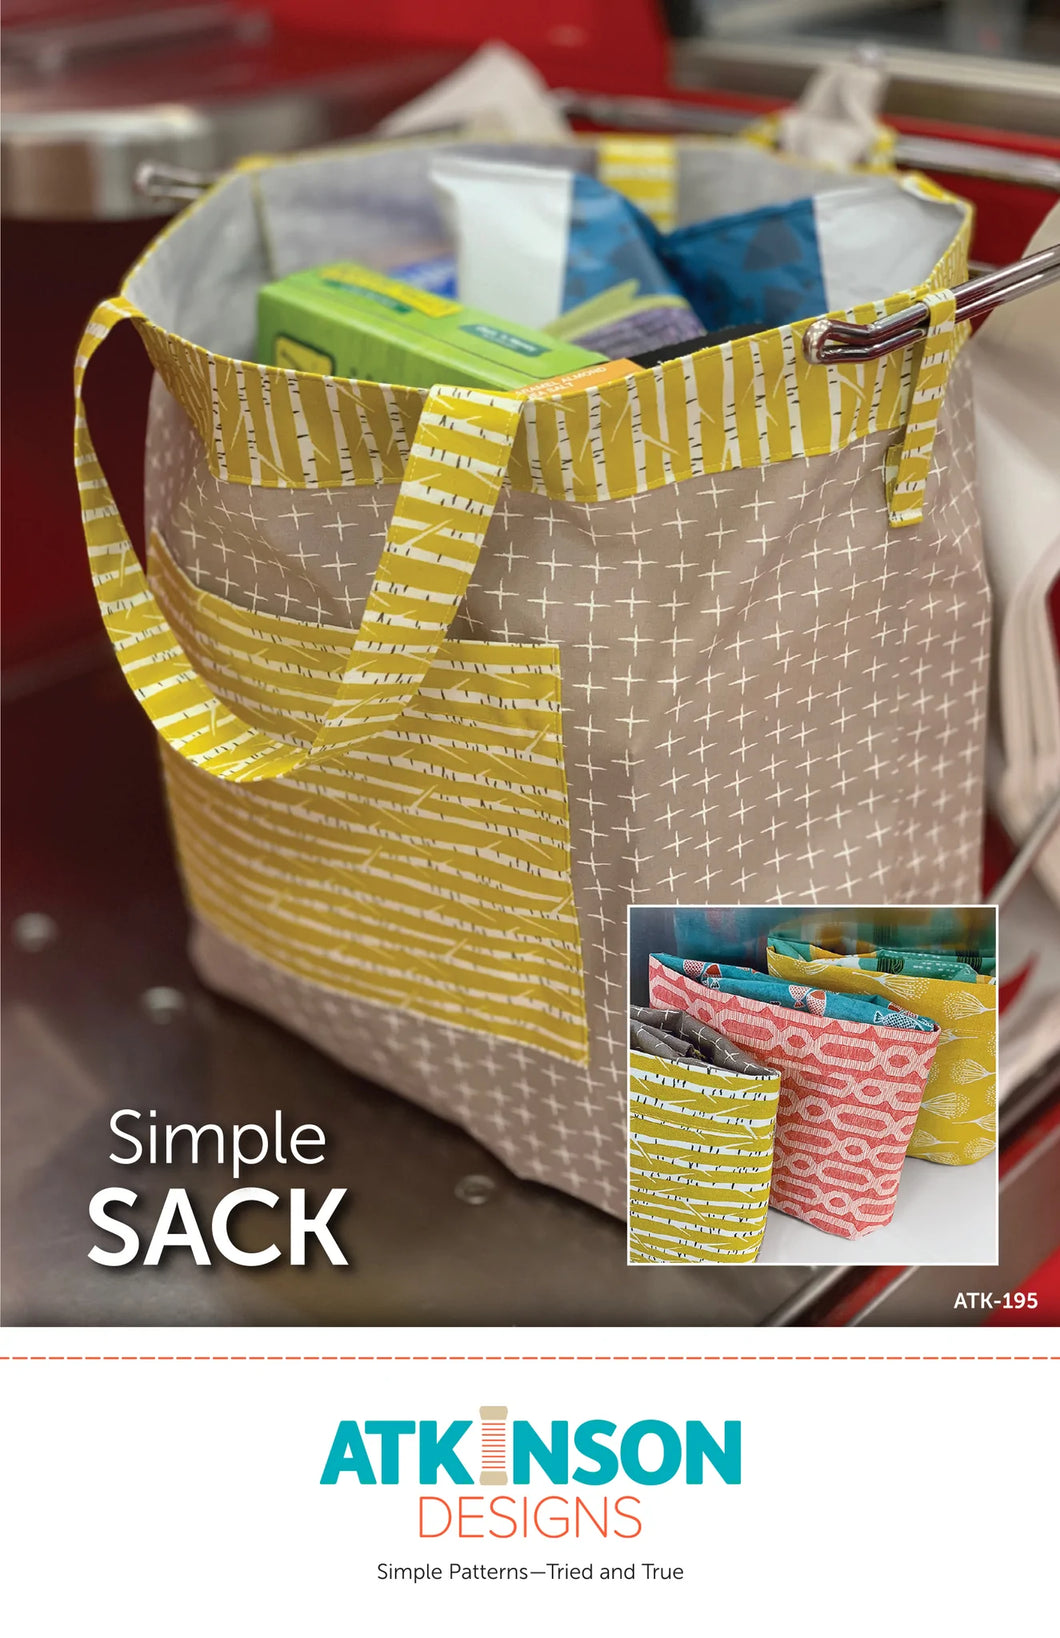 Simple Sack by Atkinson Designs